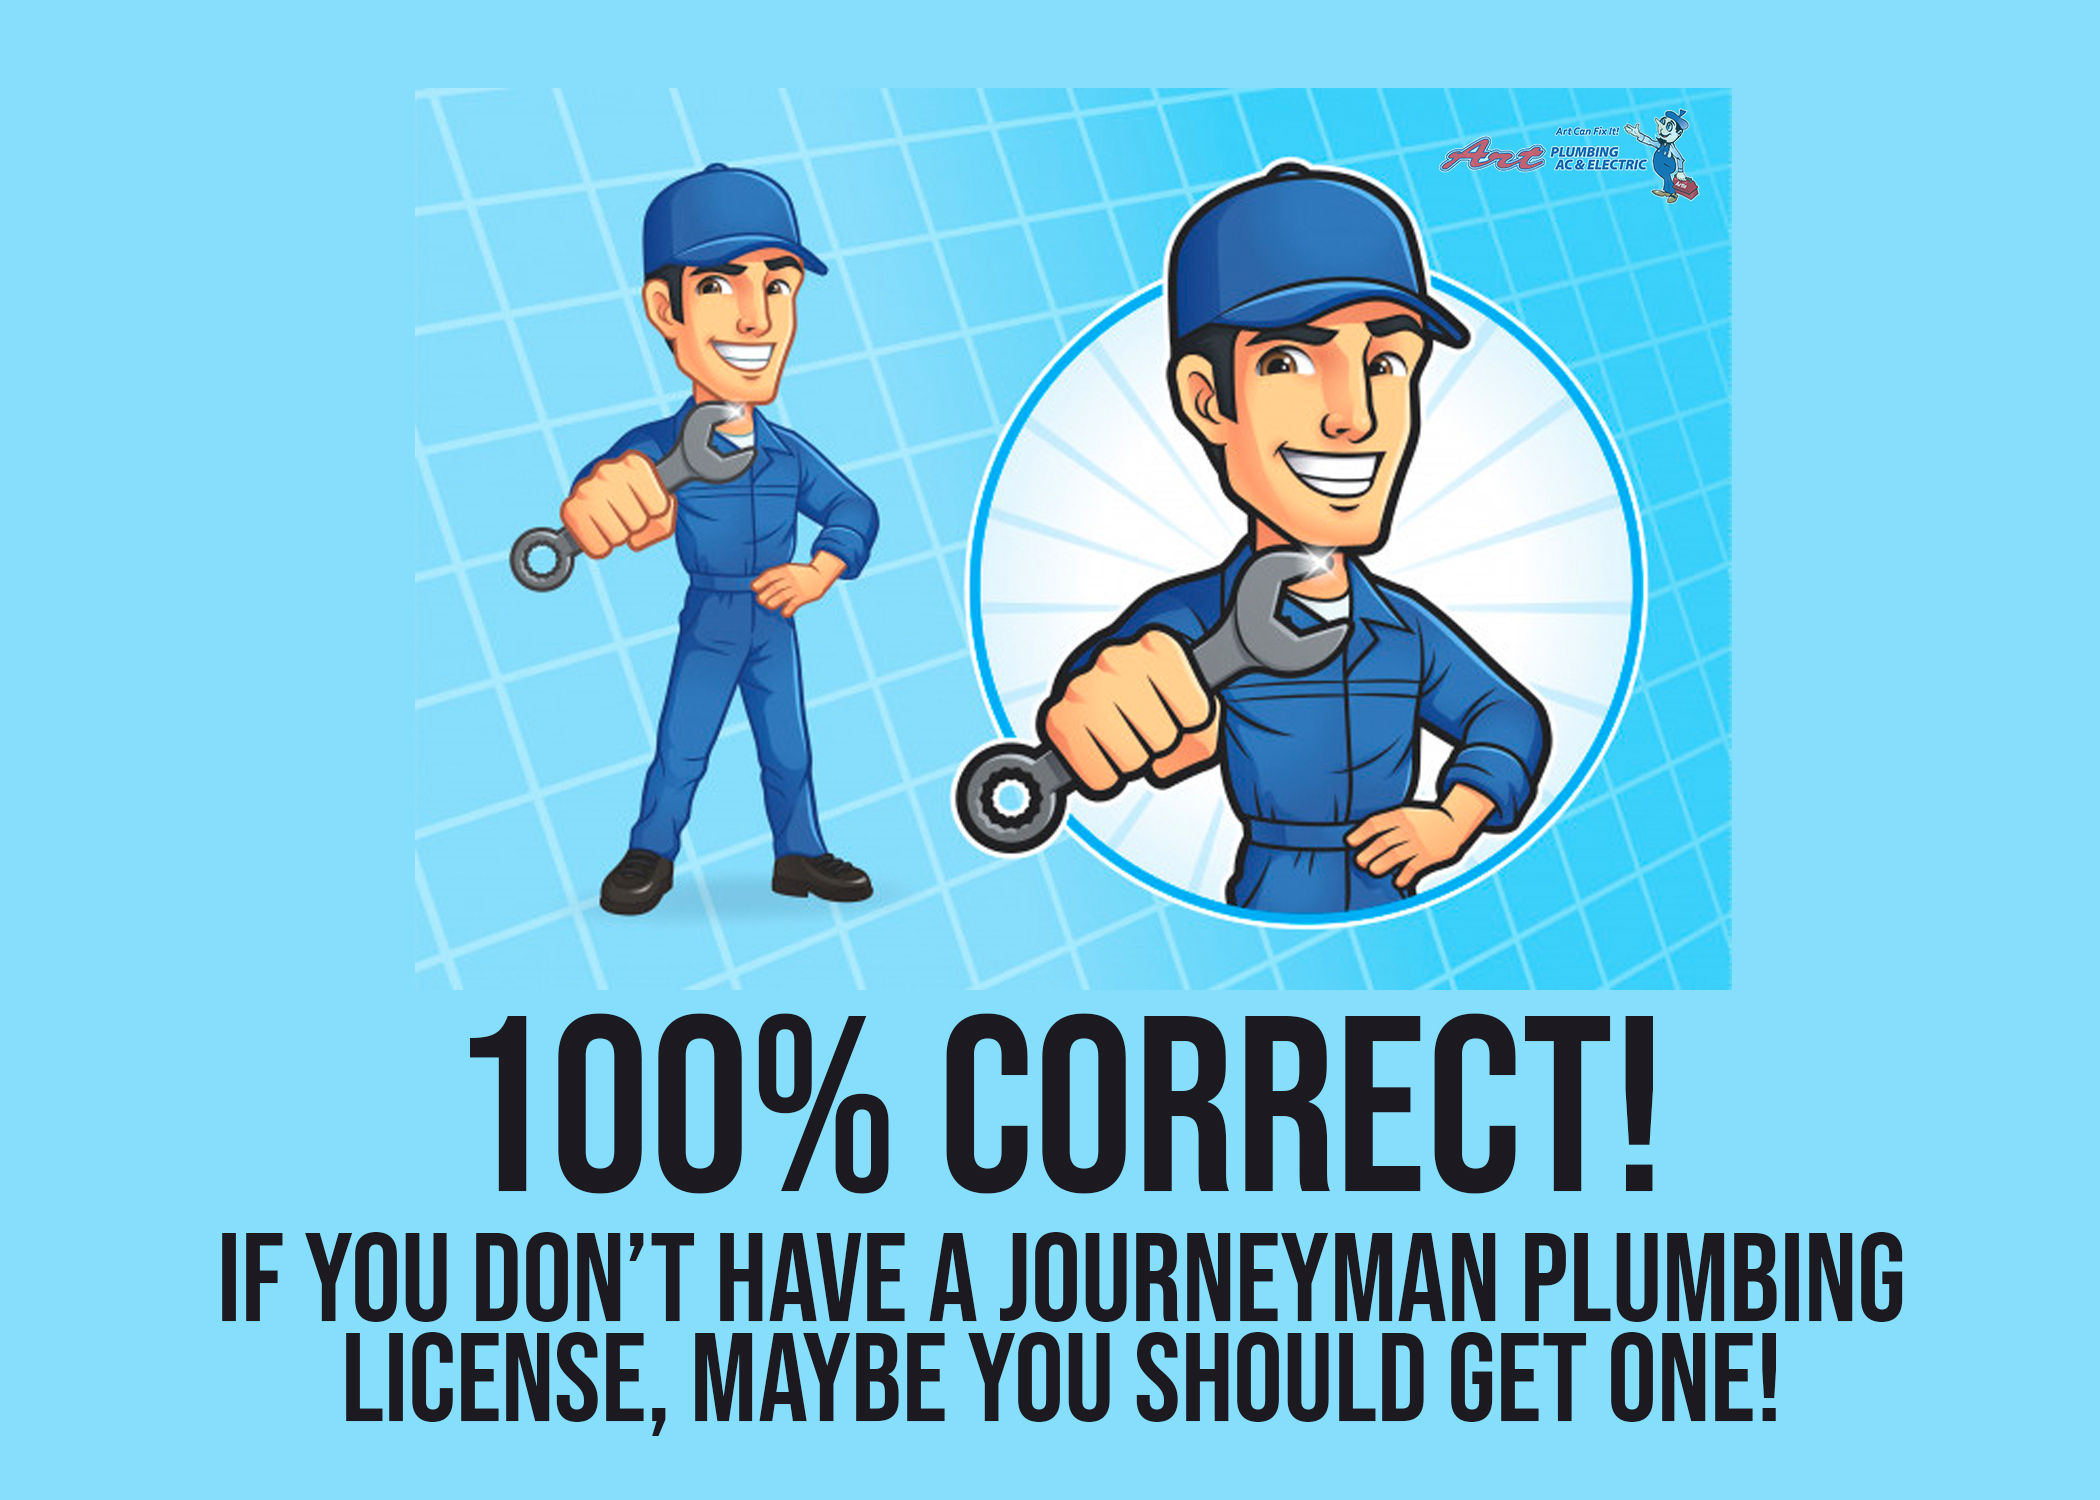 Plumbing Quiz Results: 100% Correct